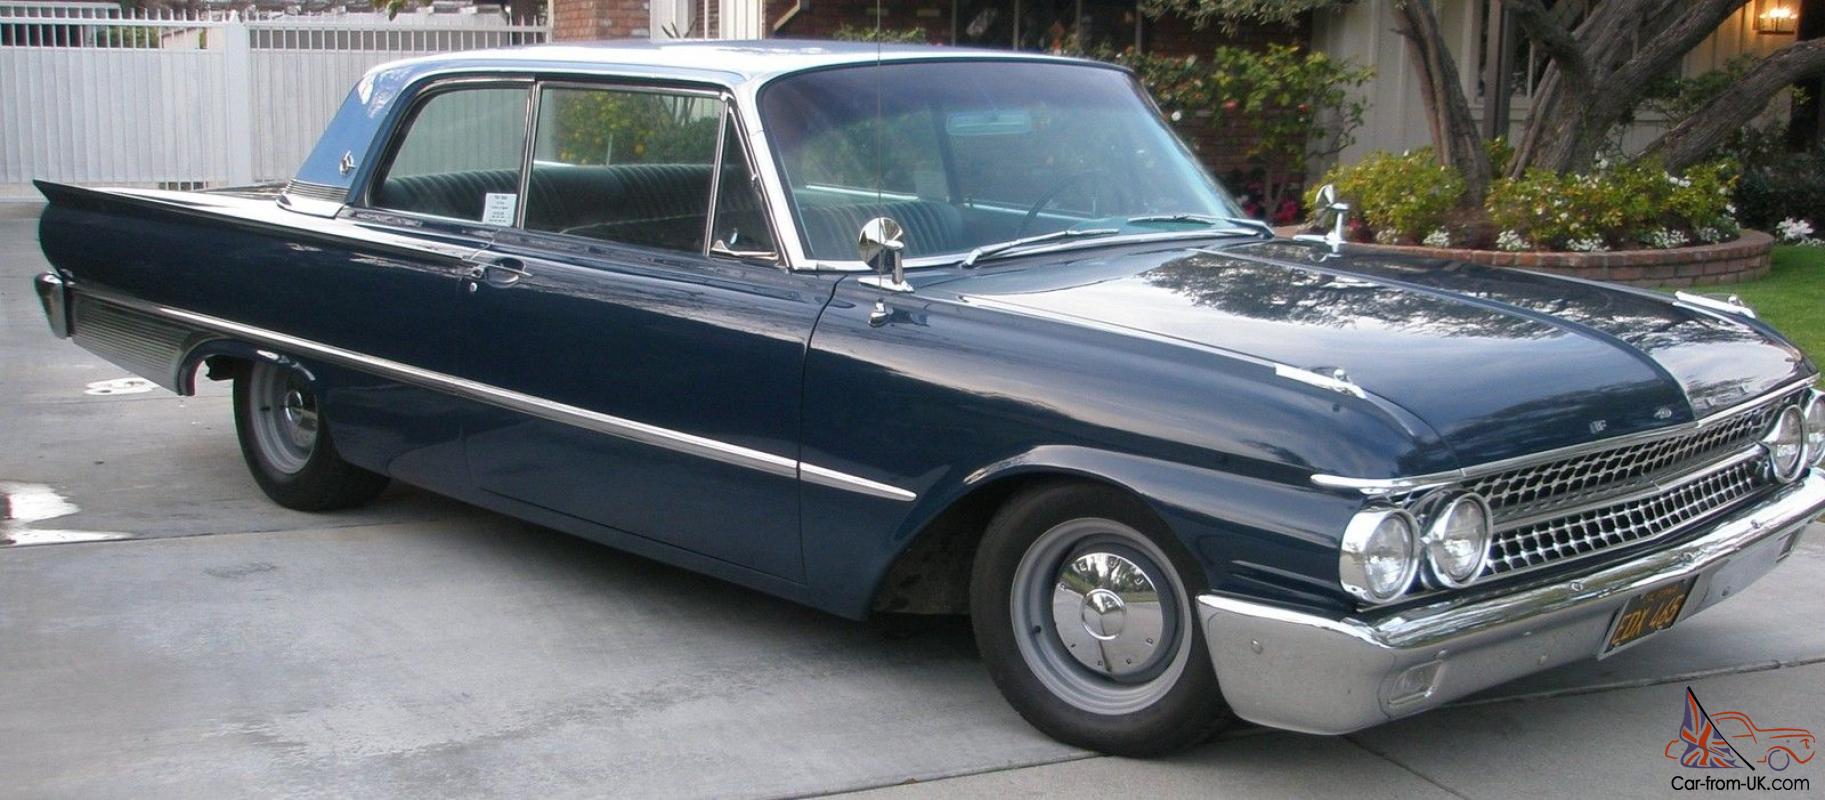 1961 Ford 2 door sedan